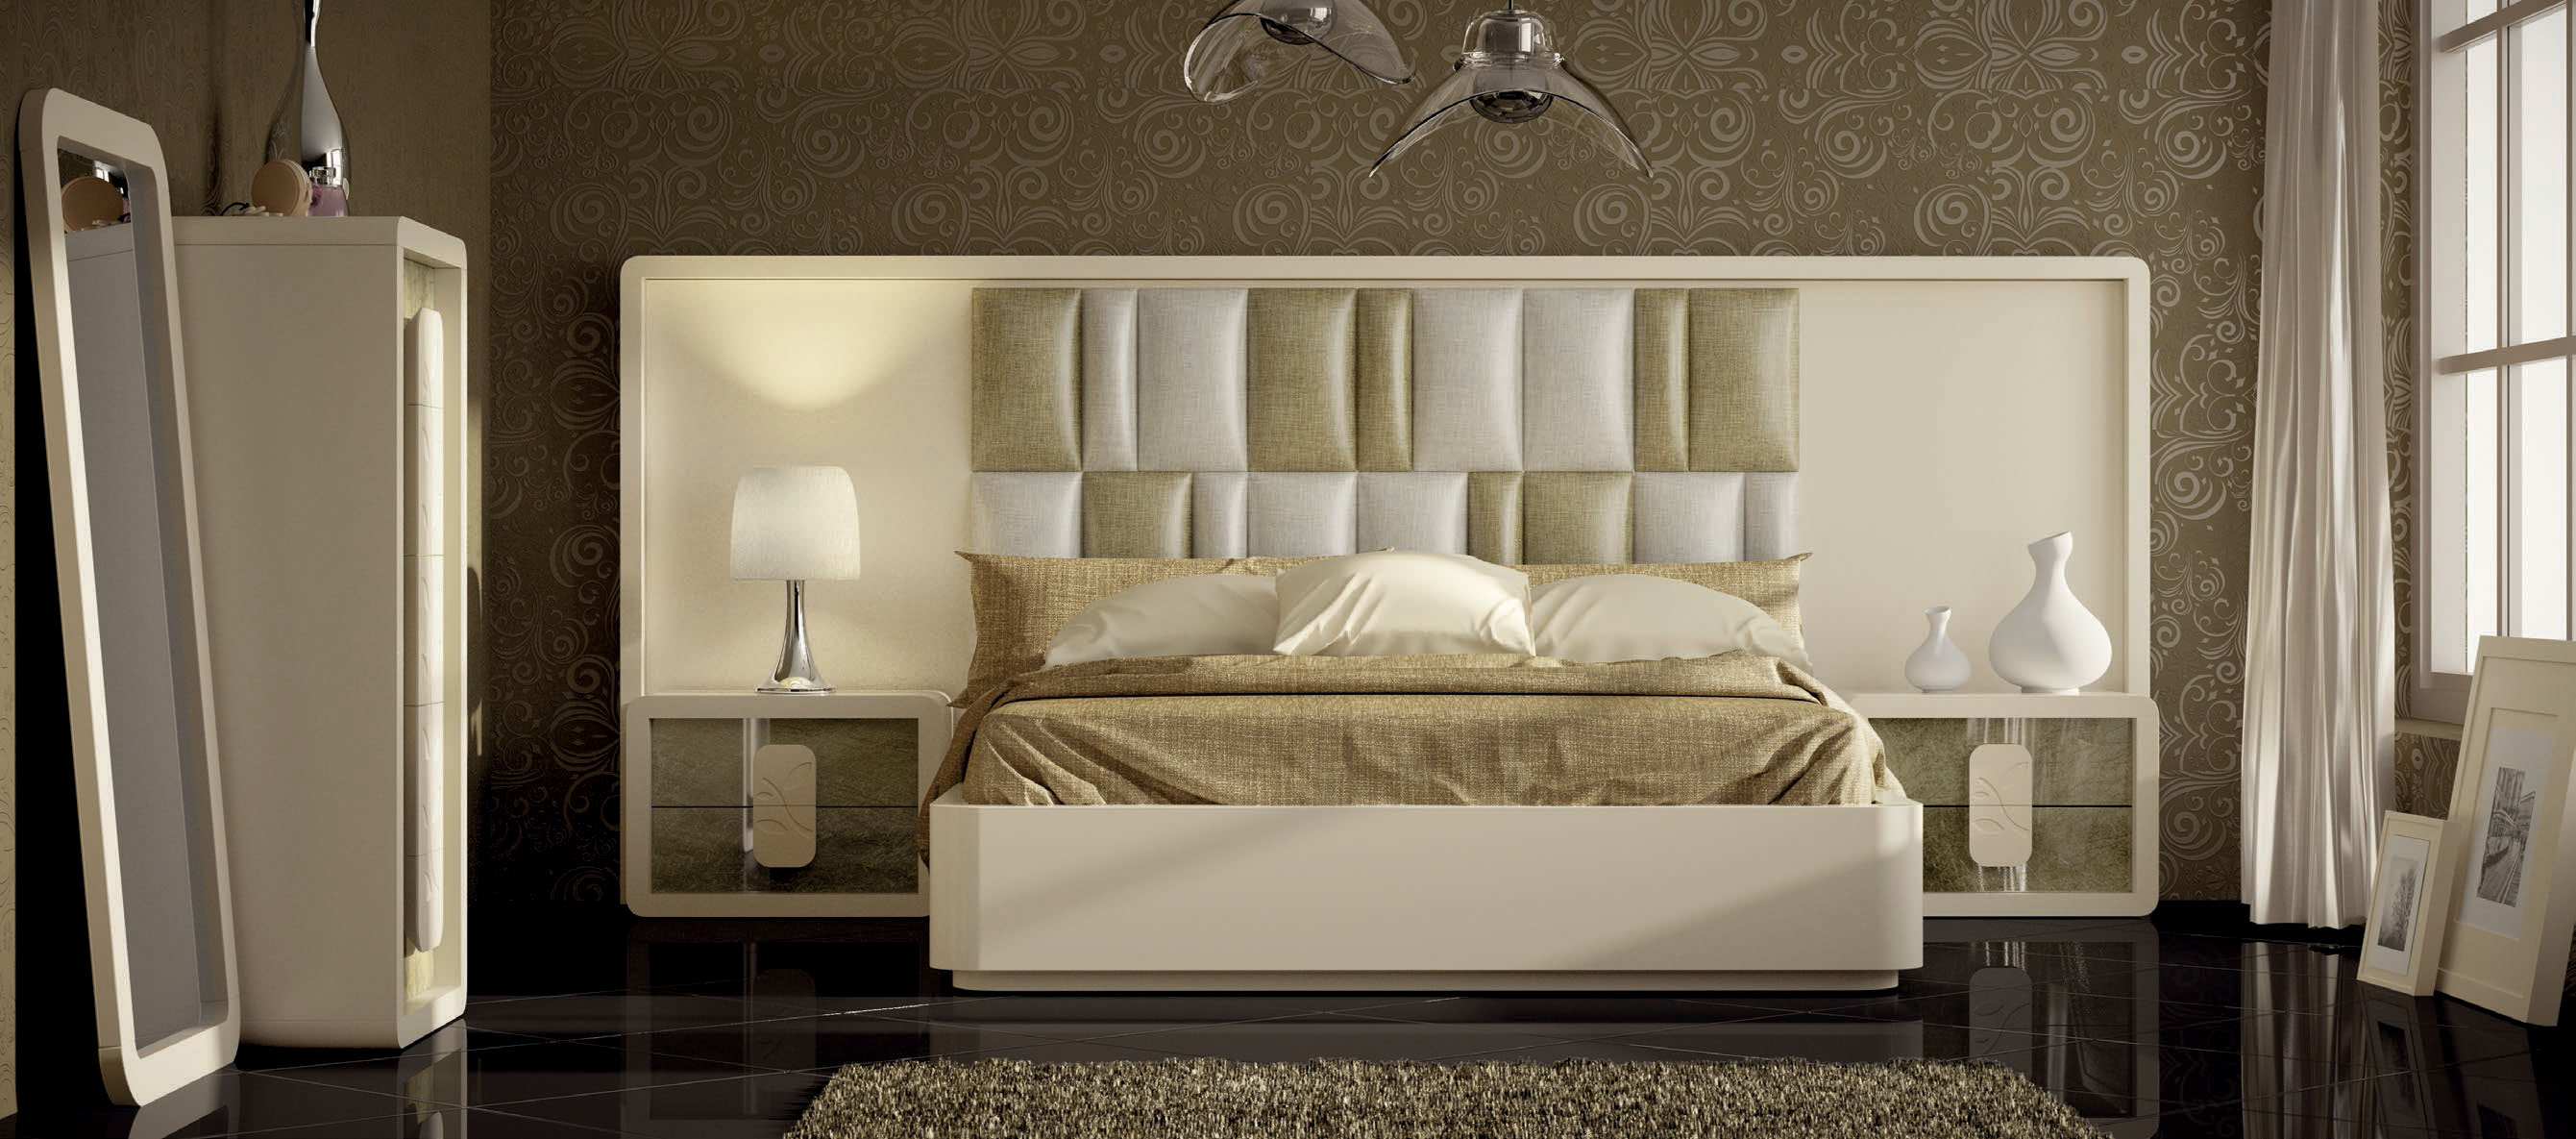 Brands Franco Furniture Bedrooms vol1, Spain DOR 171